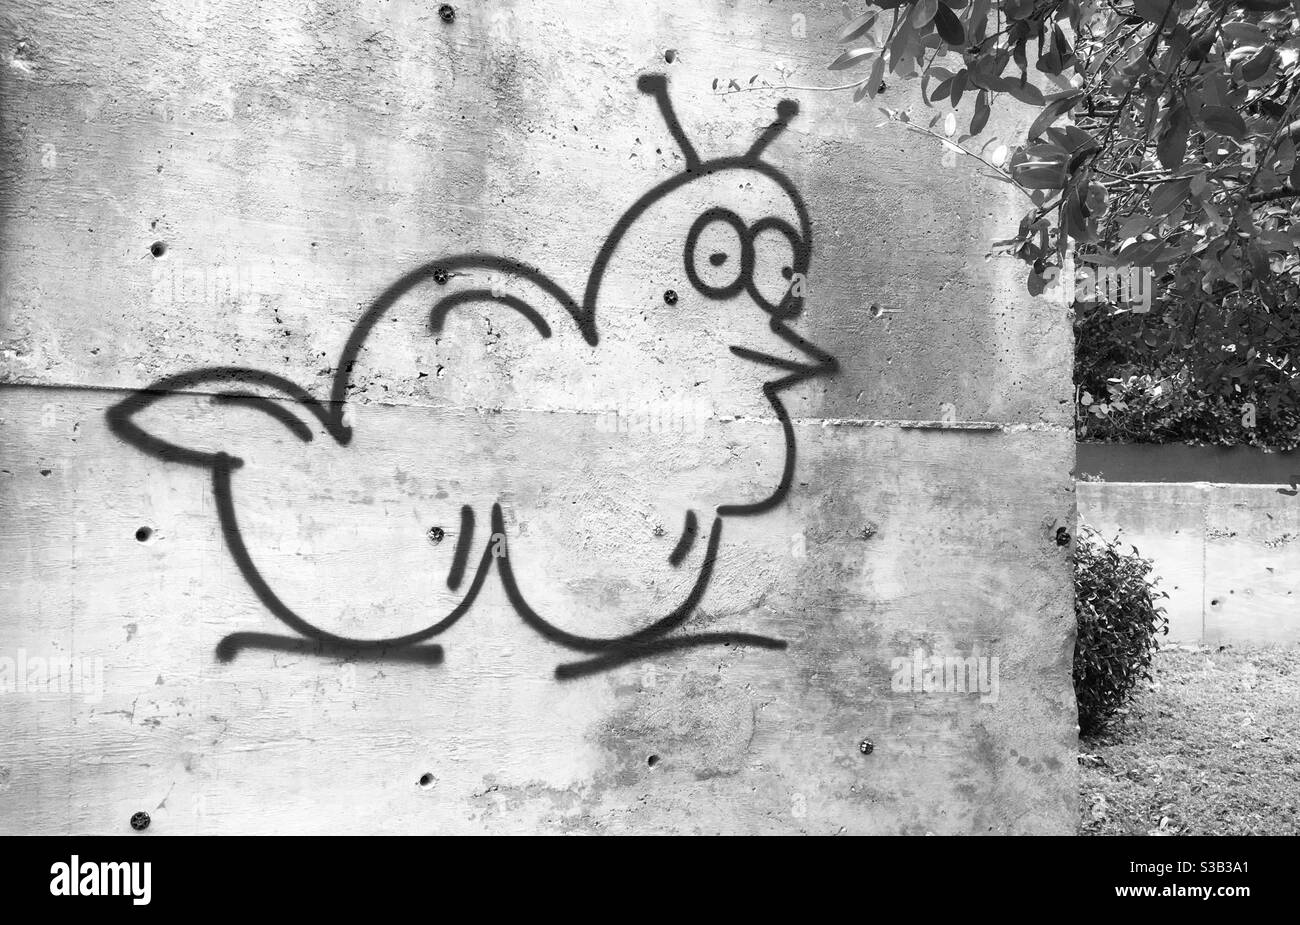 Graffiti d'un escargot ou d'un ver ? Banque D'Images